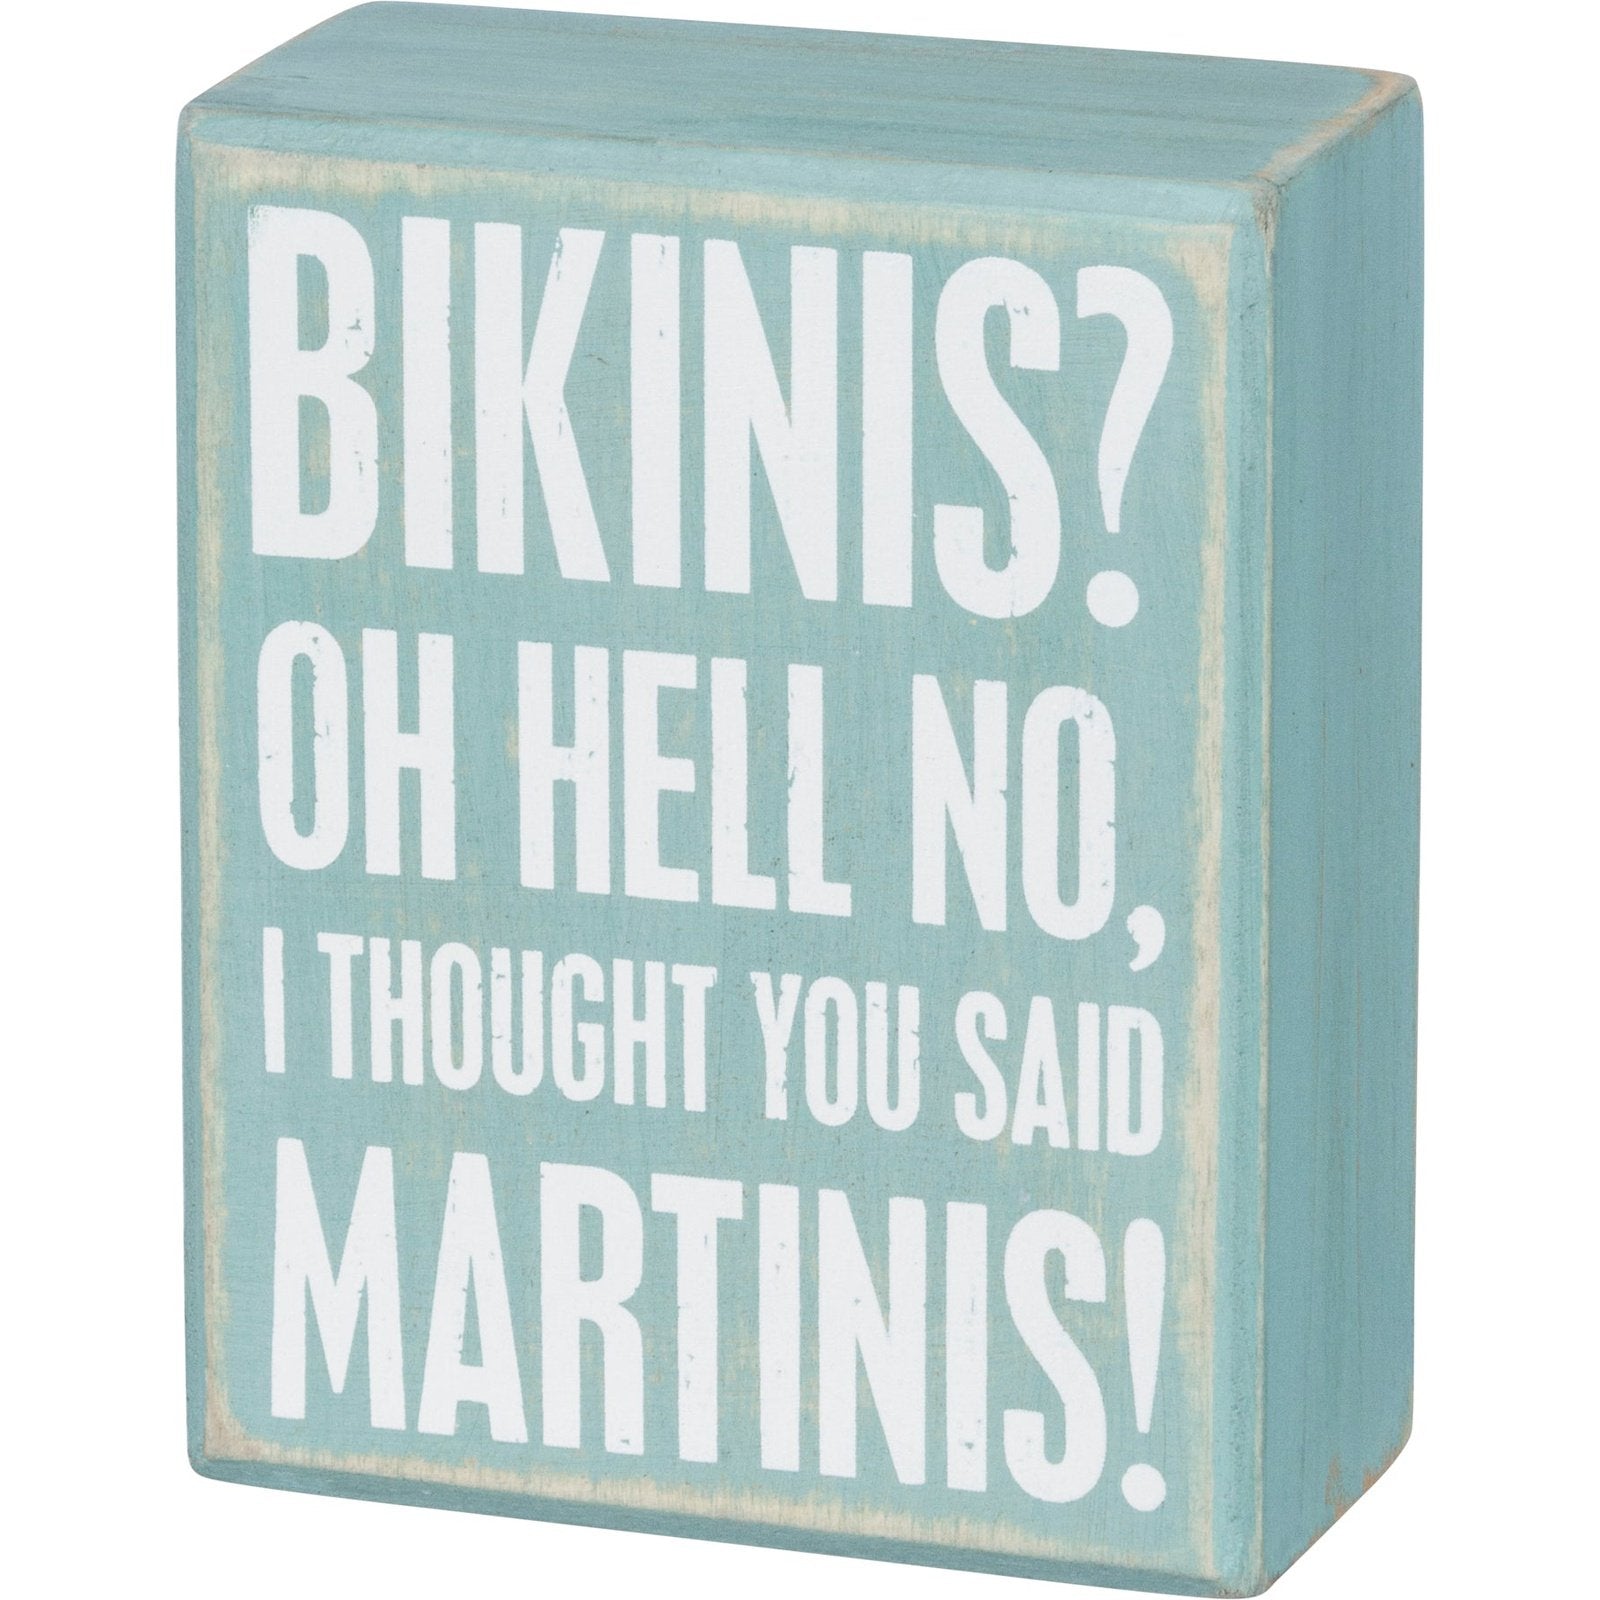 Bikinis Martinis Box Sign SolagoHome